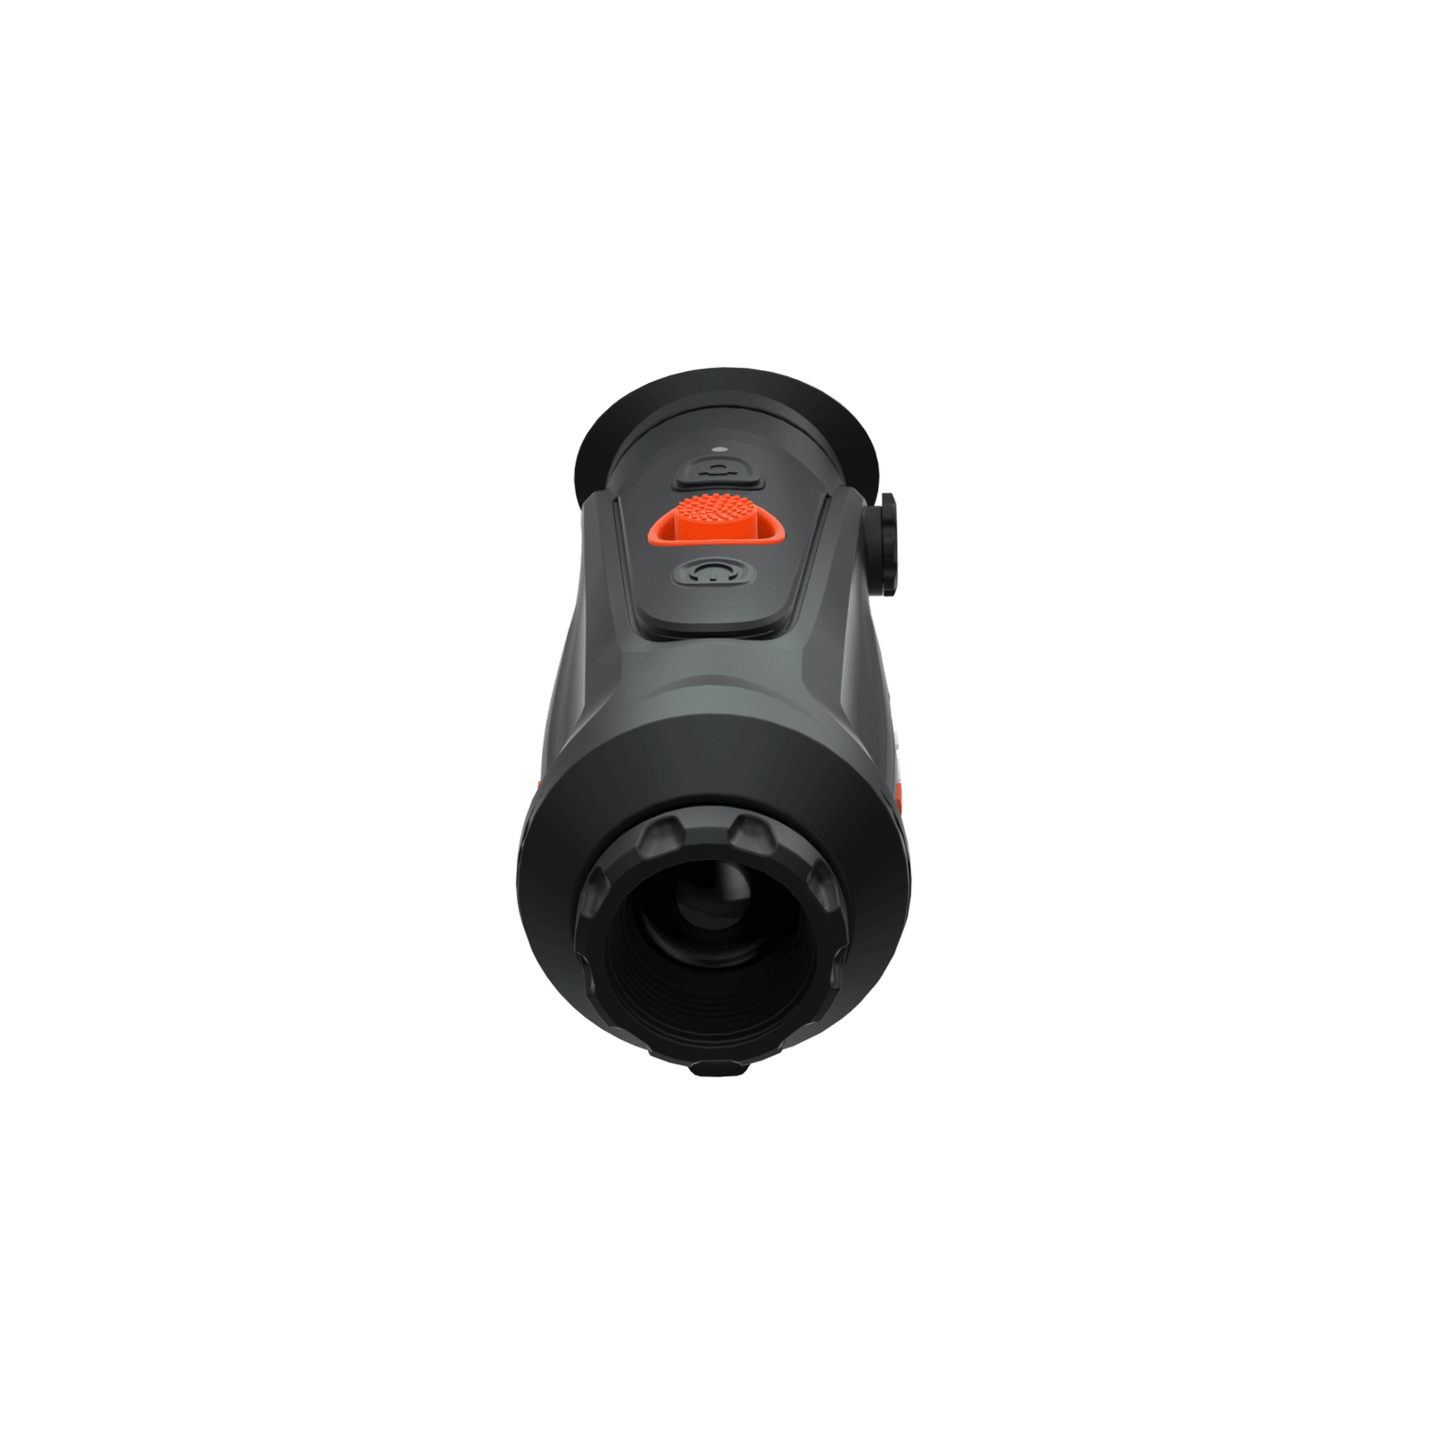 Cyclops 325 Pro Thermal Spotter tietuilla